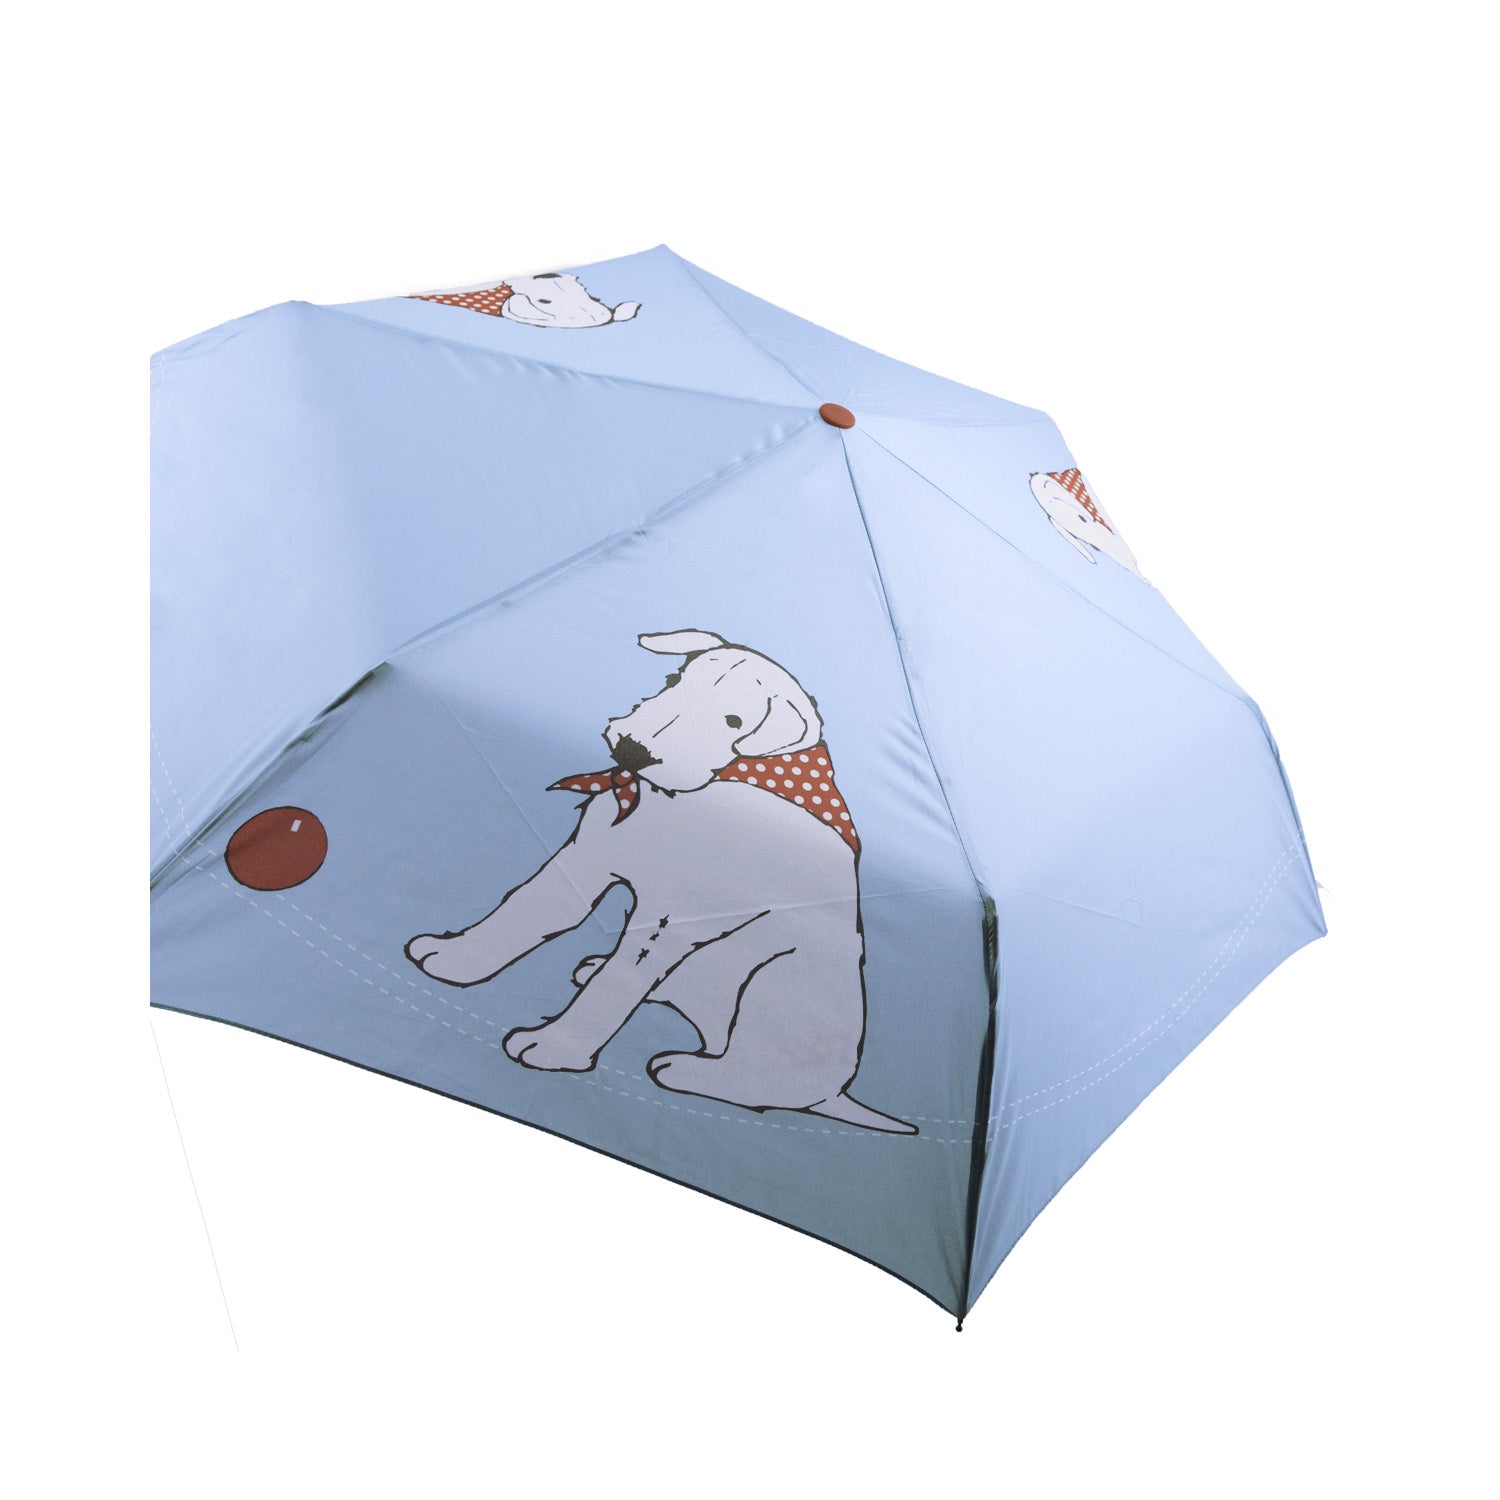 DogKrazyGifts - Douglas The Boy Wonder Boy Folding Umbrella - part of the Little Dog Range available from Dog Krazy Gifts